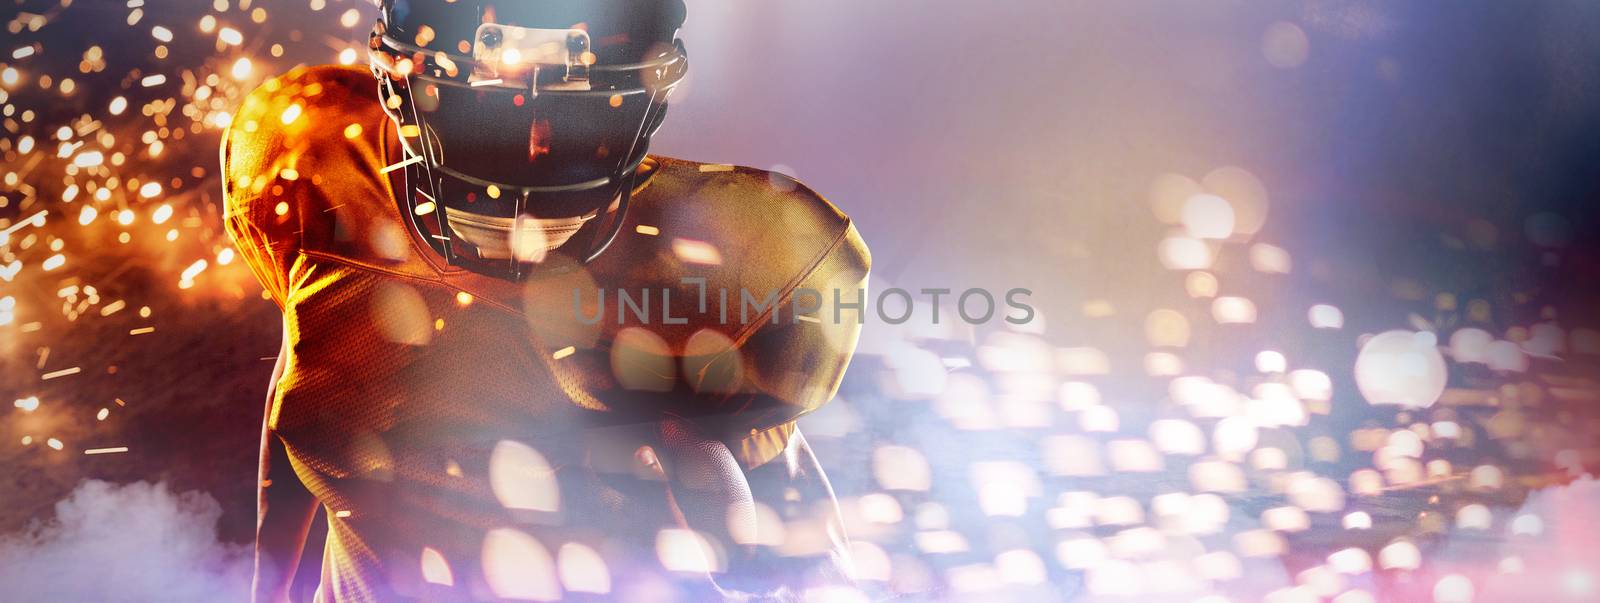 Portrait of determined American football player holding ball against firework bursting sparkle background